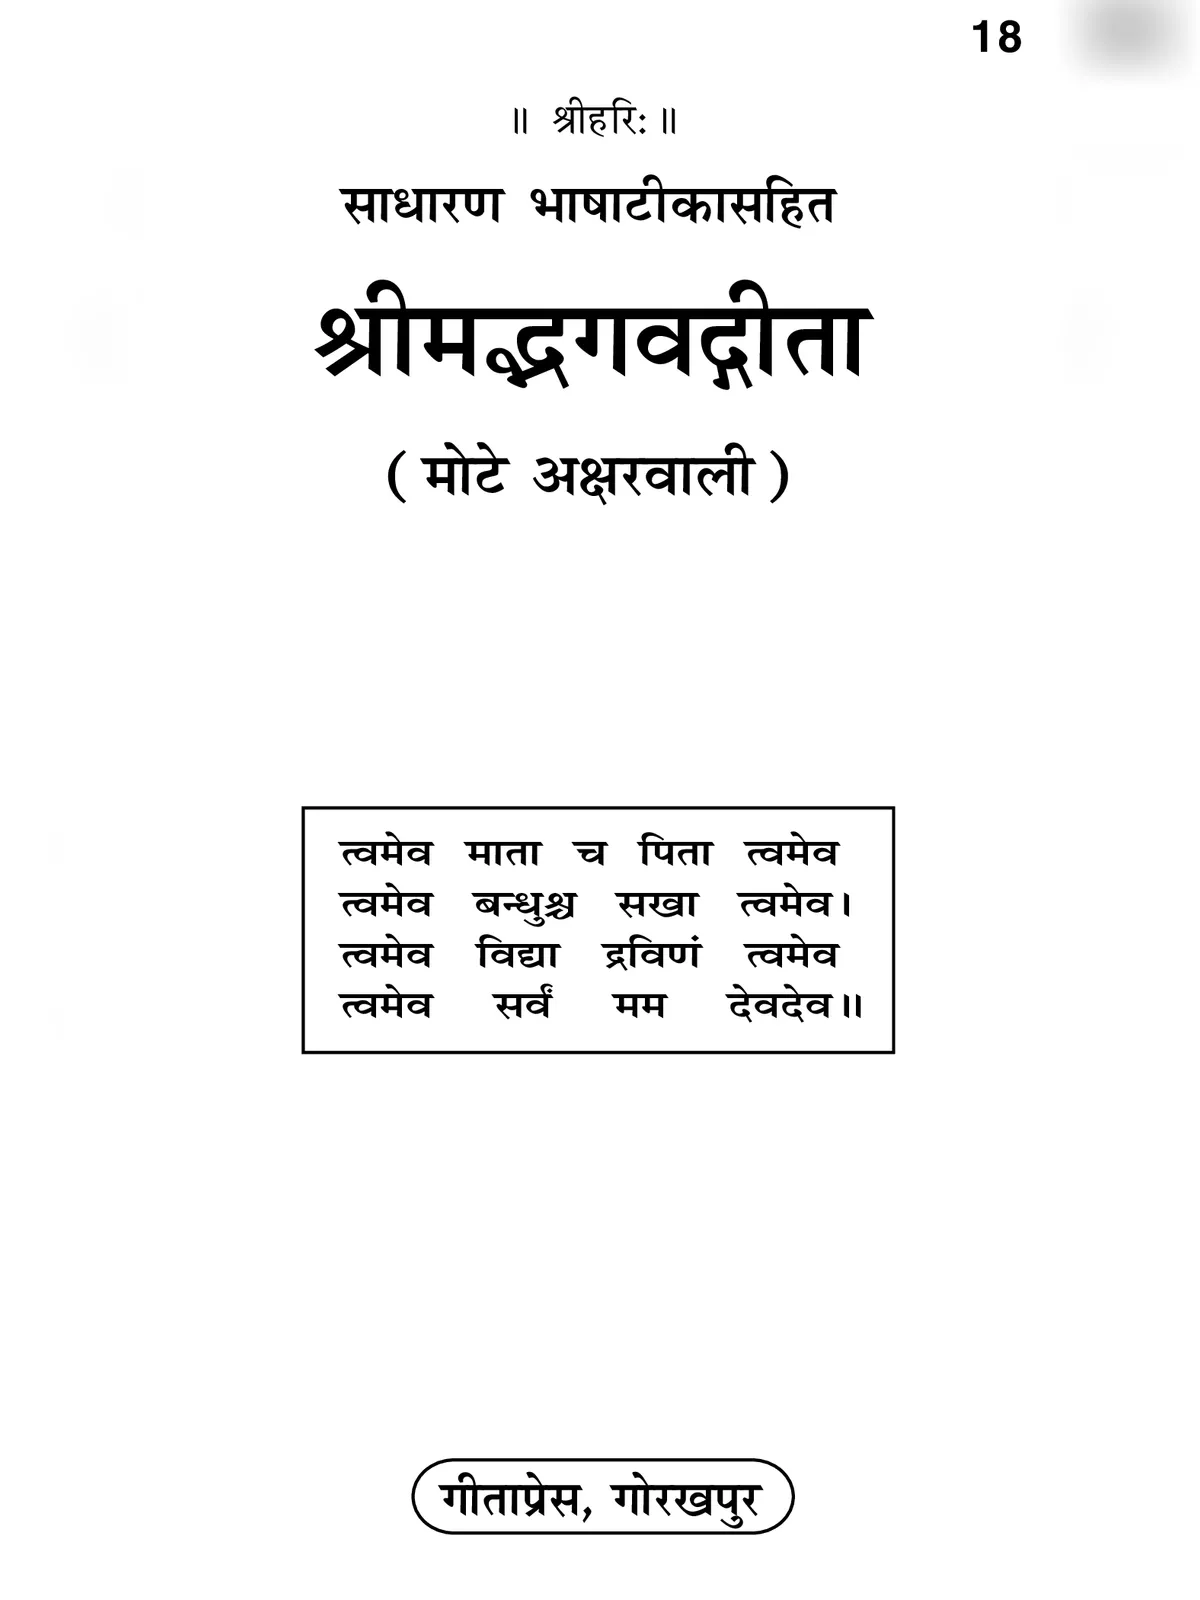 Bhagavad Gita (श्रीमद्भगवद्गीता)